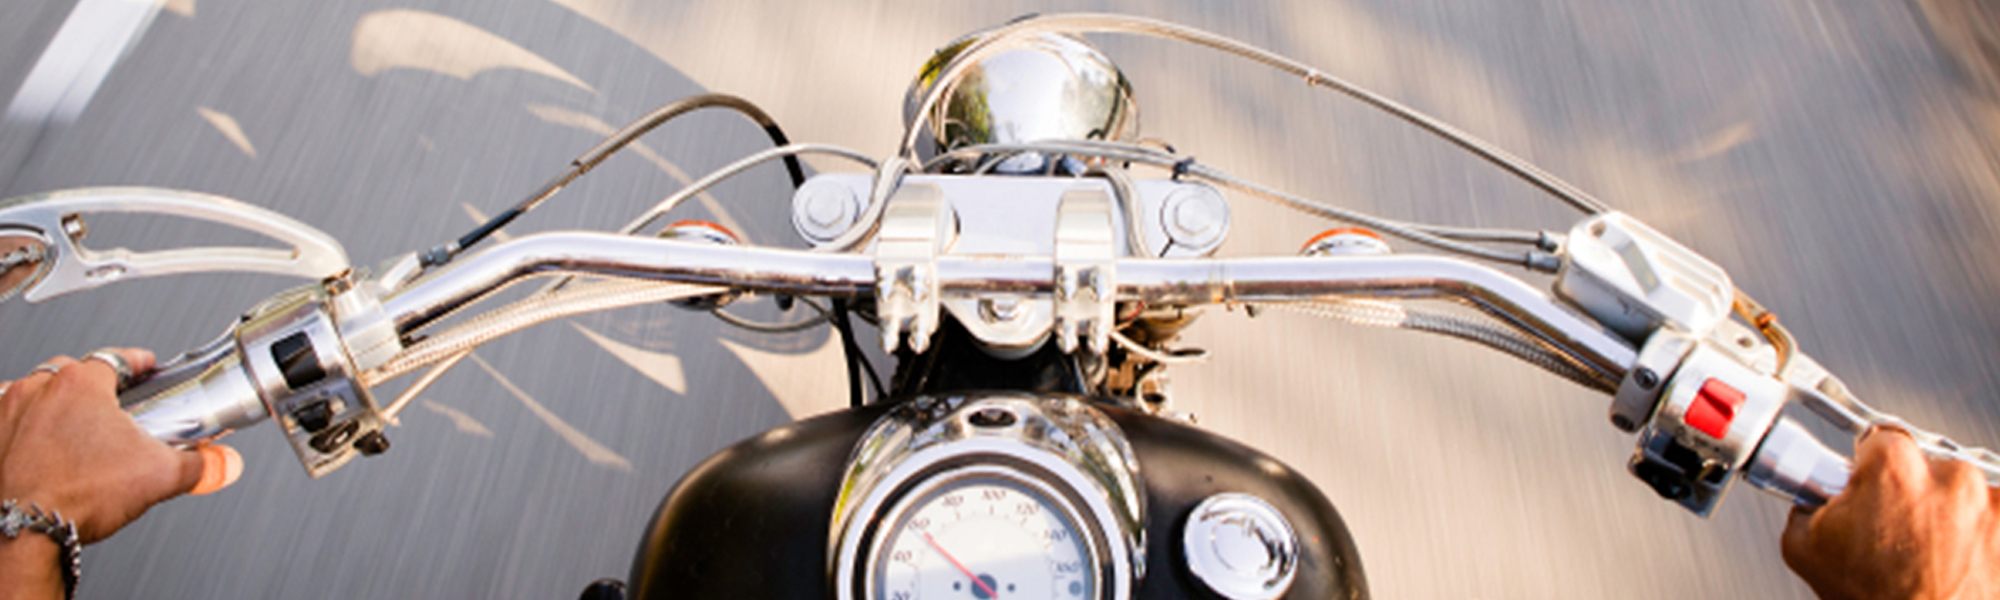 Alabama Motorcycle Insurance Coverage